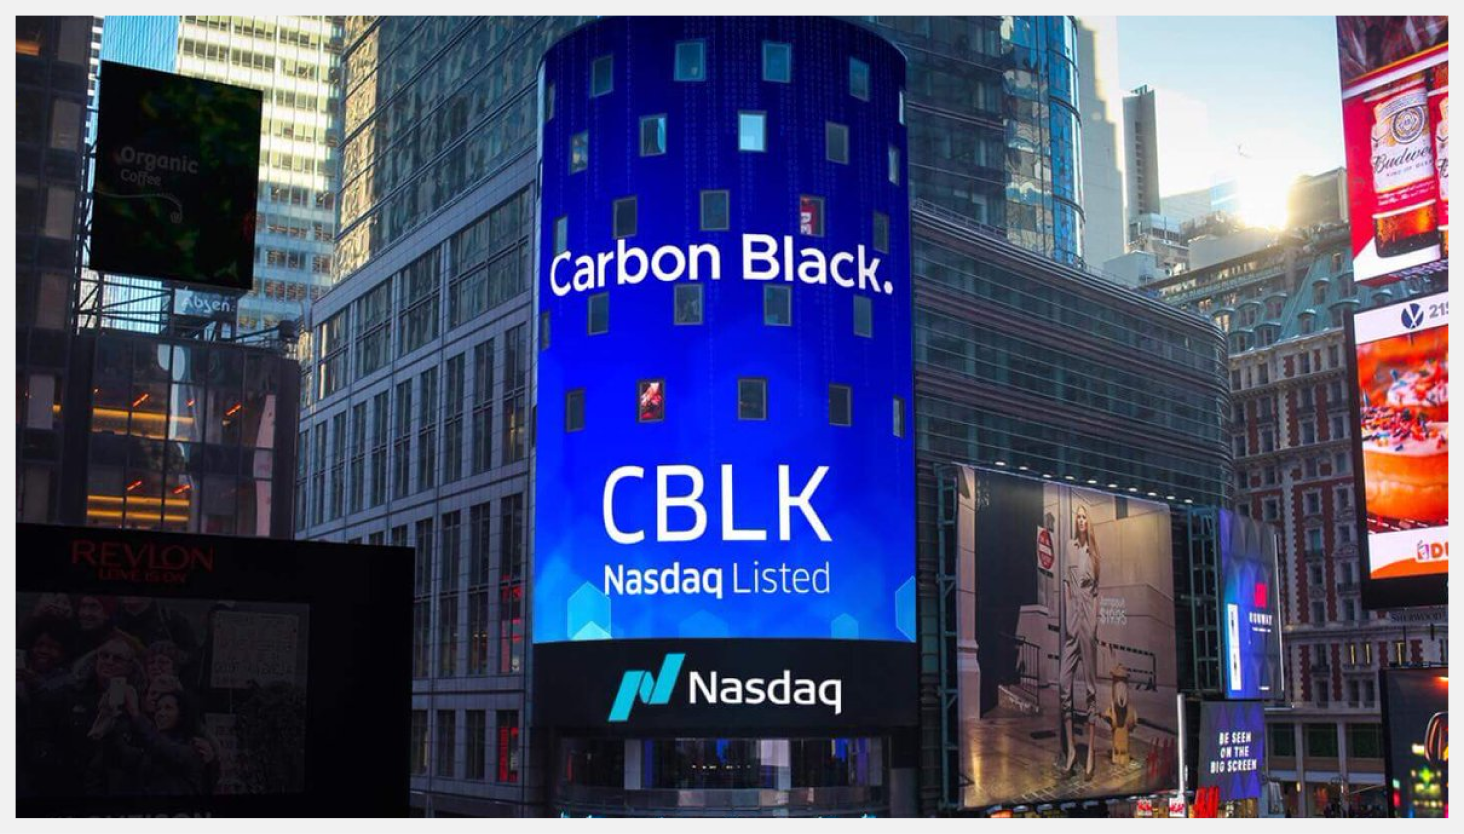 Photograph of Carbon Black logo on the Nasdaq billboard